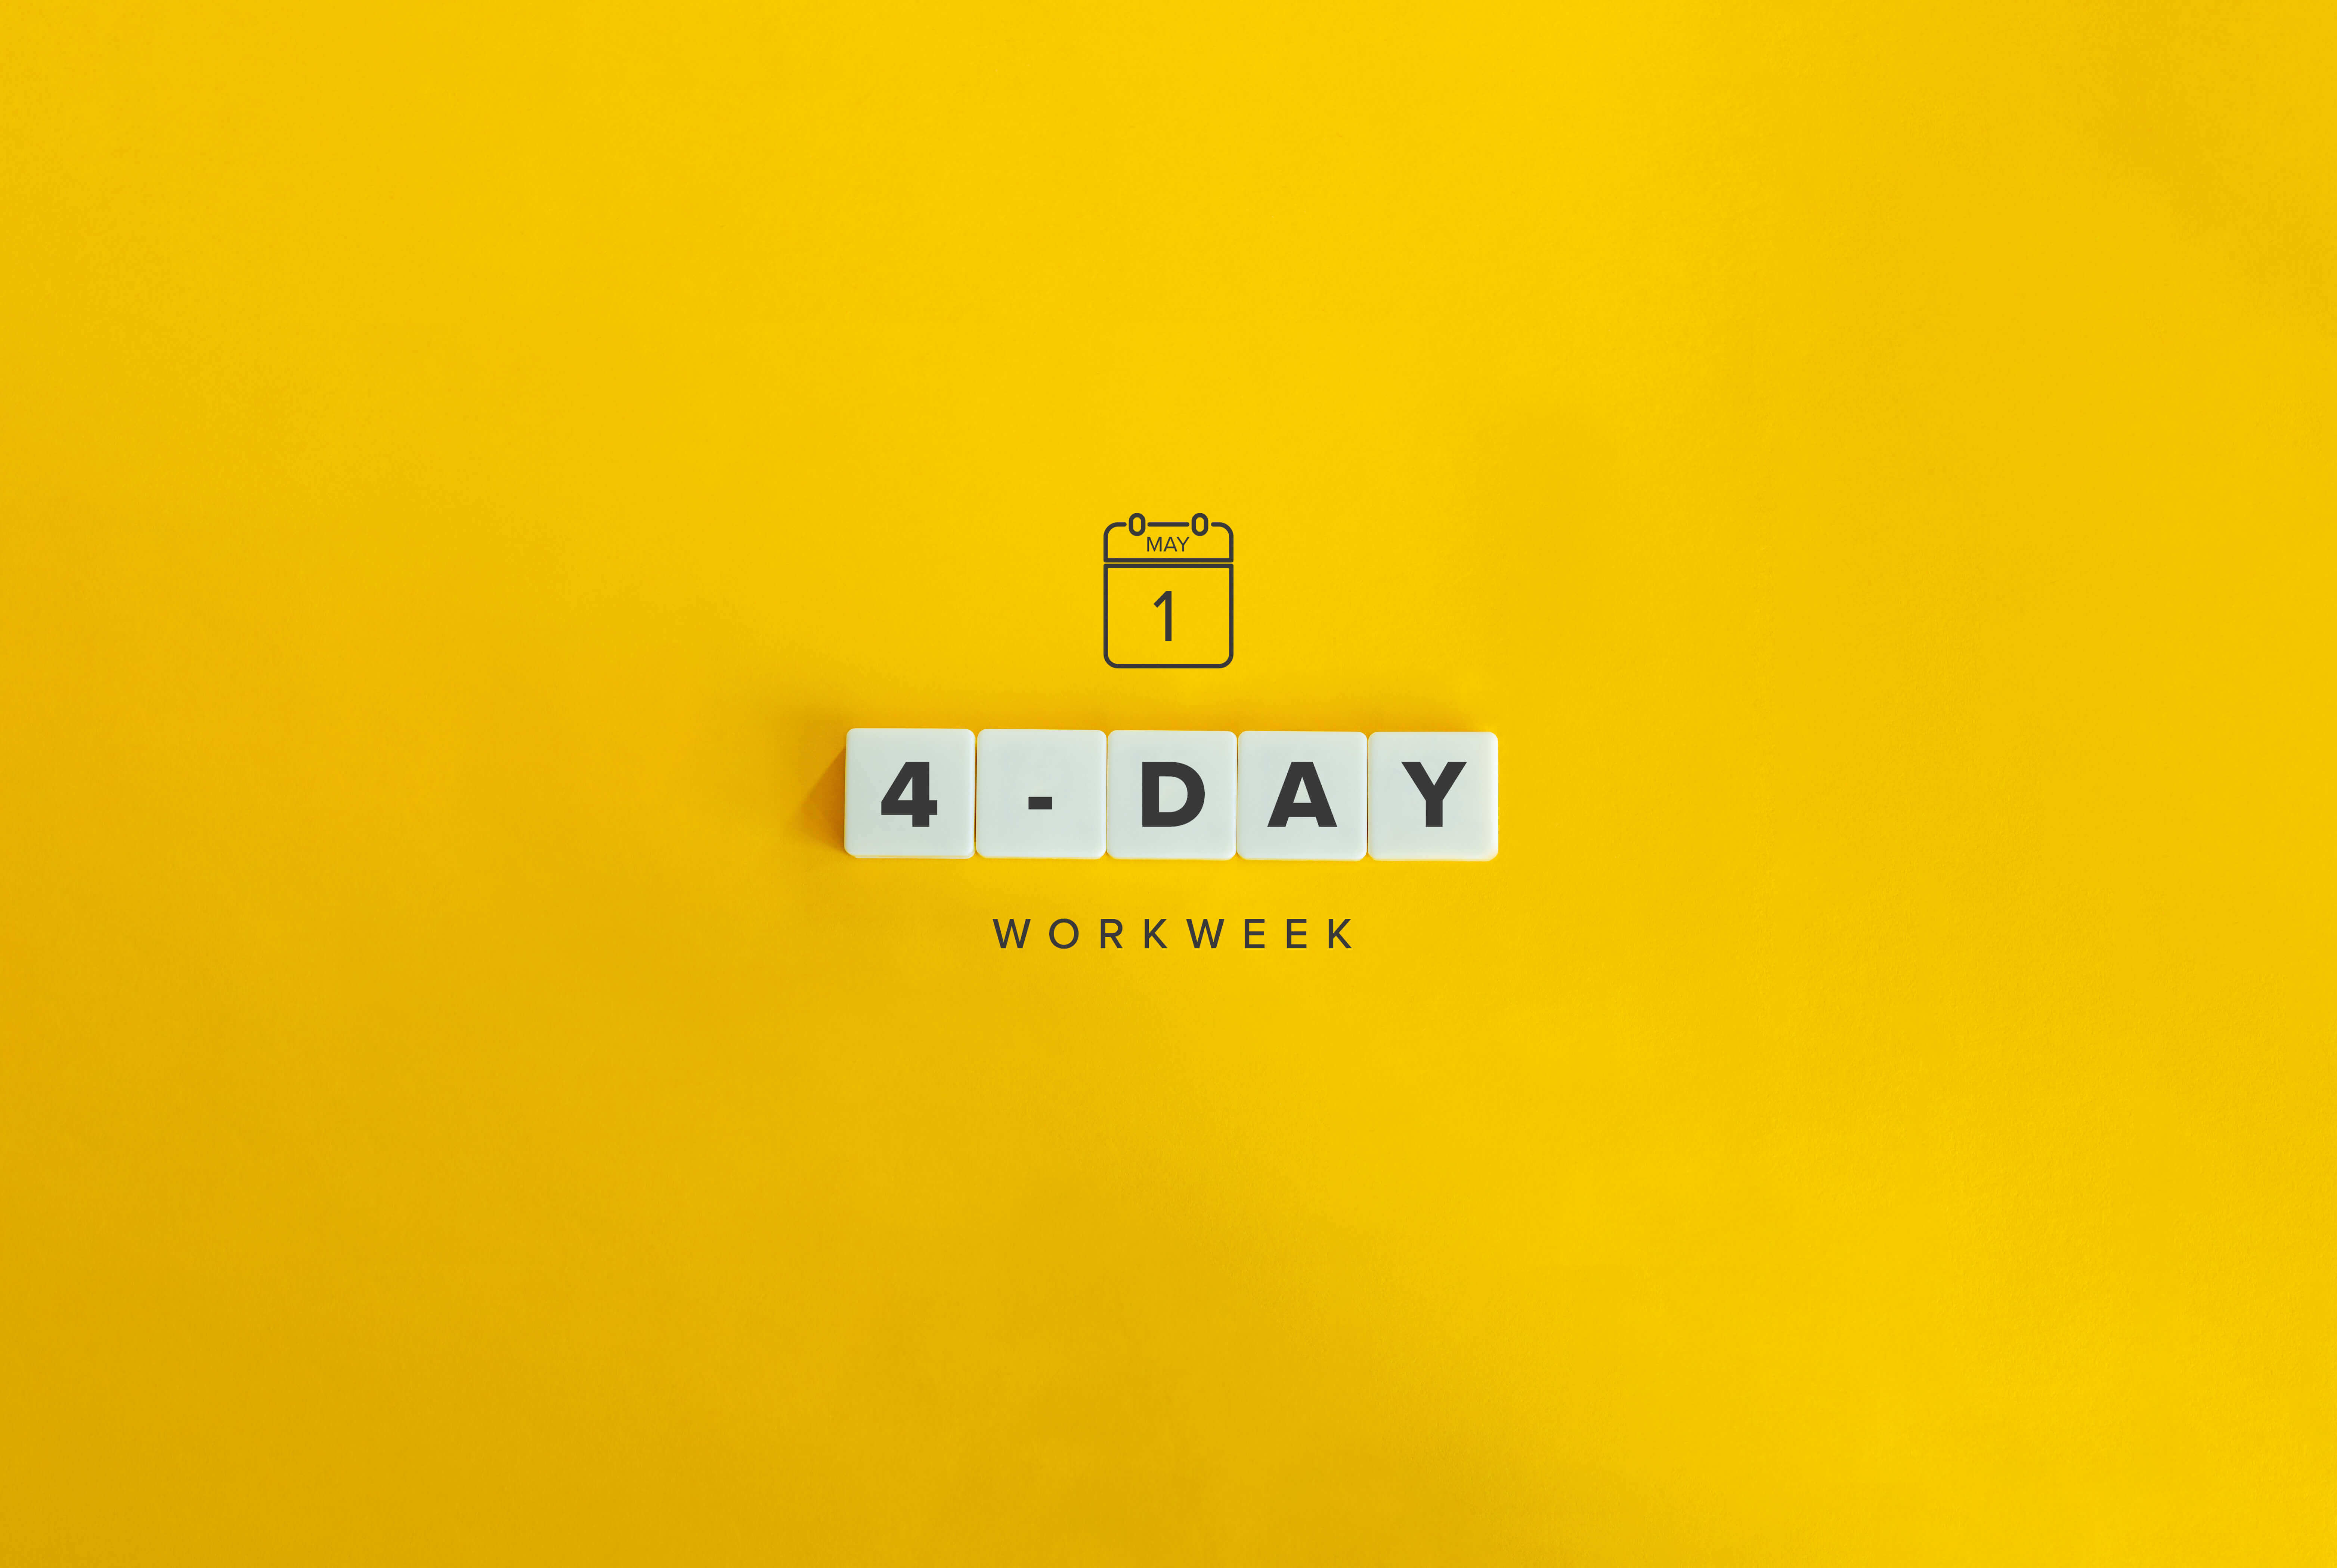 4 day work week image